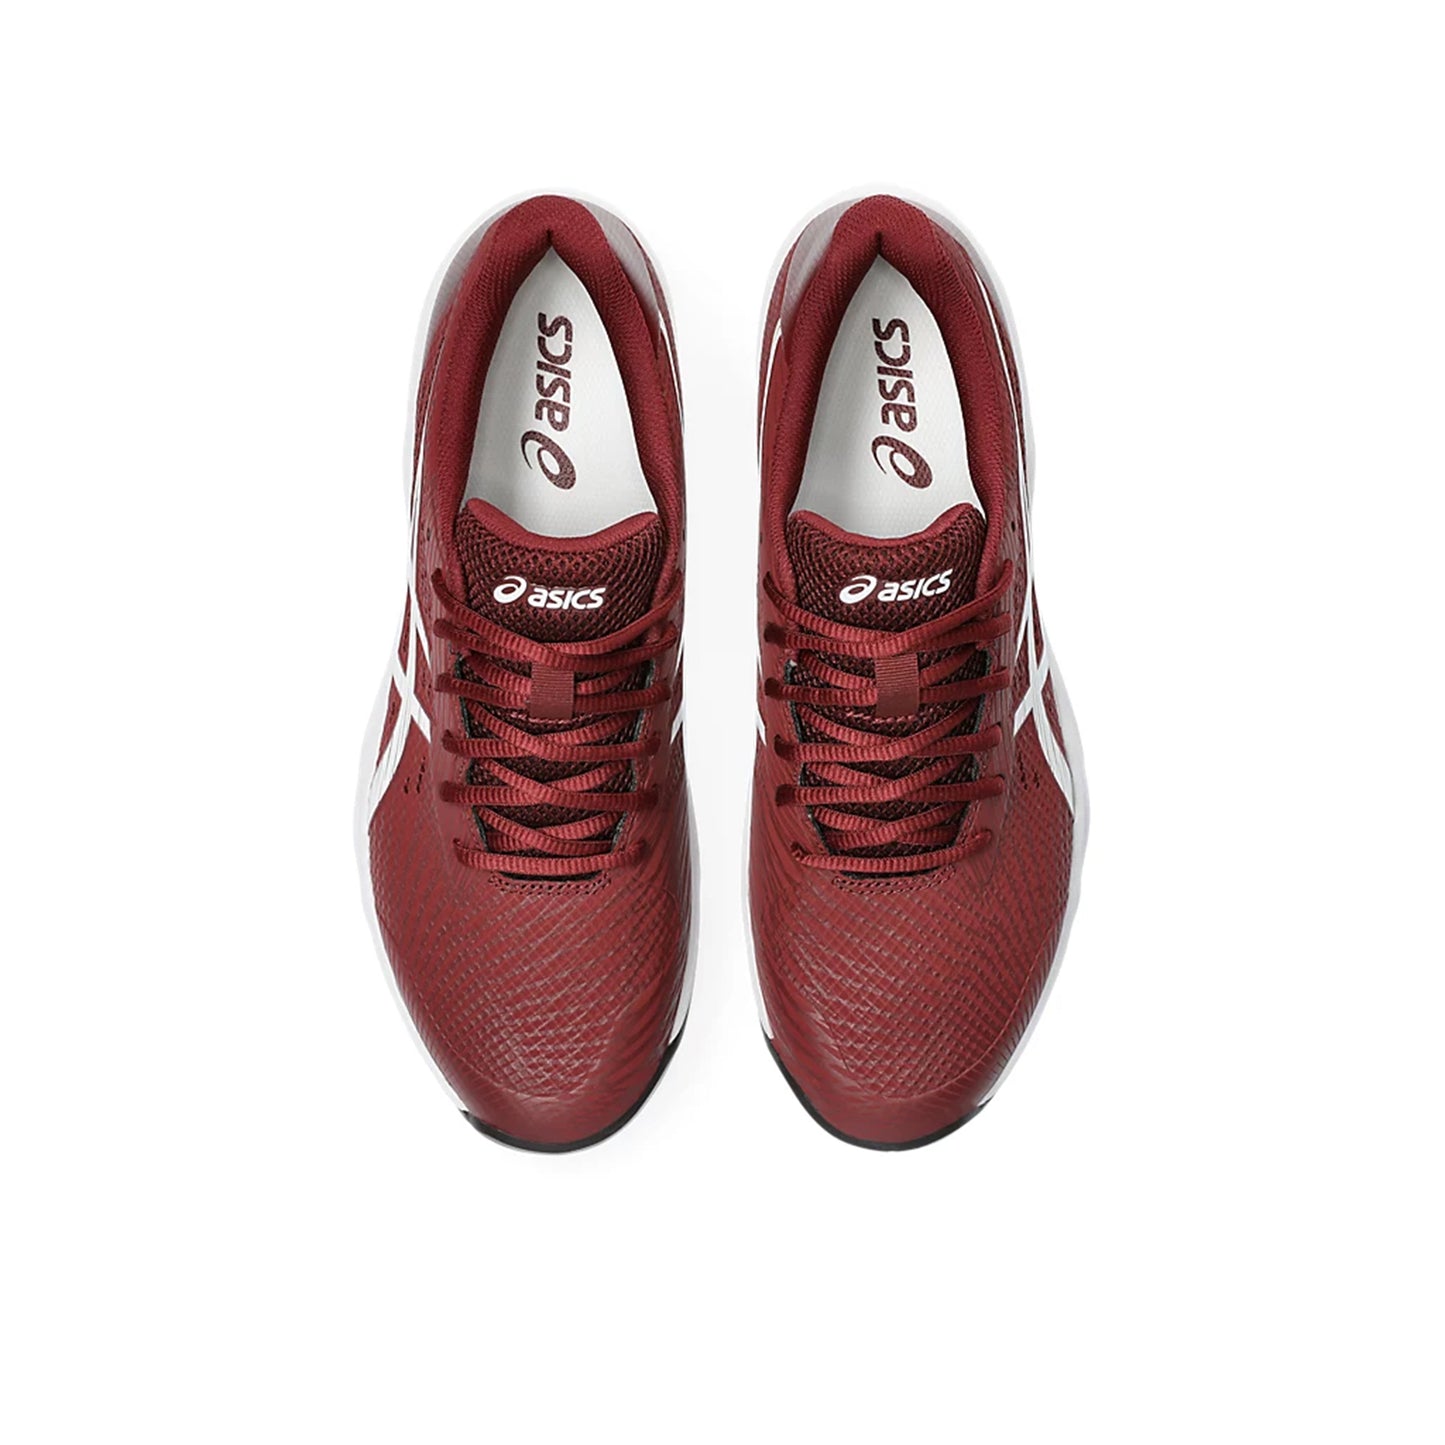 Asics Gel-Game 9 Men's Tennis Shoes - Best Price online Prokicksports.com